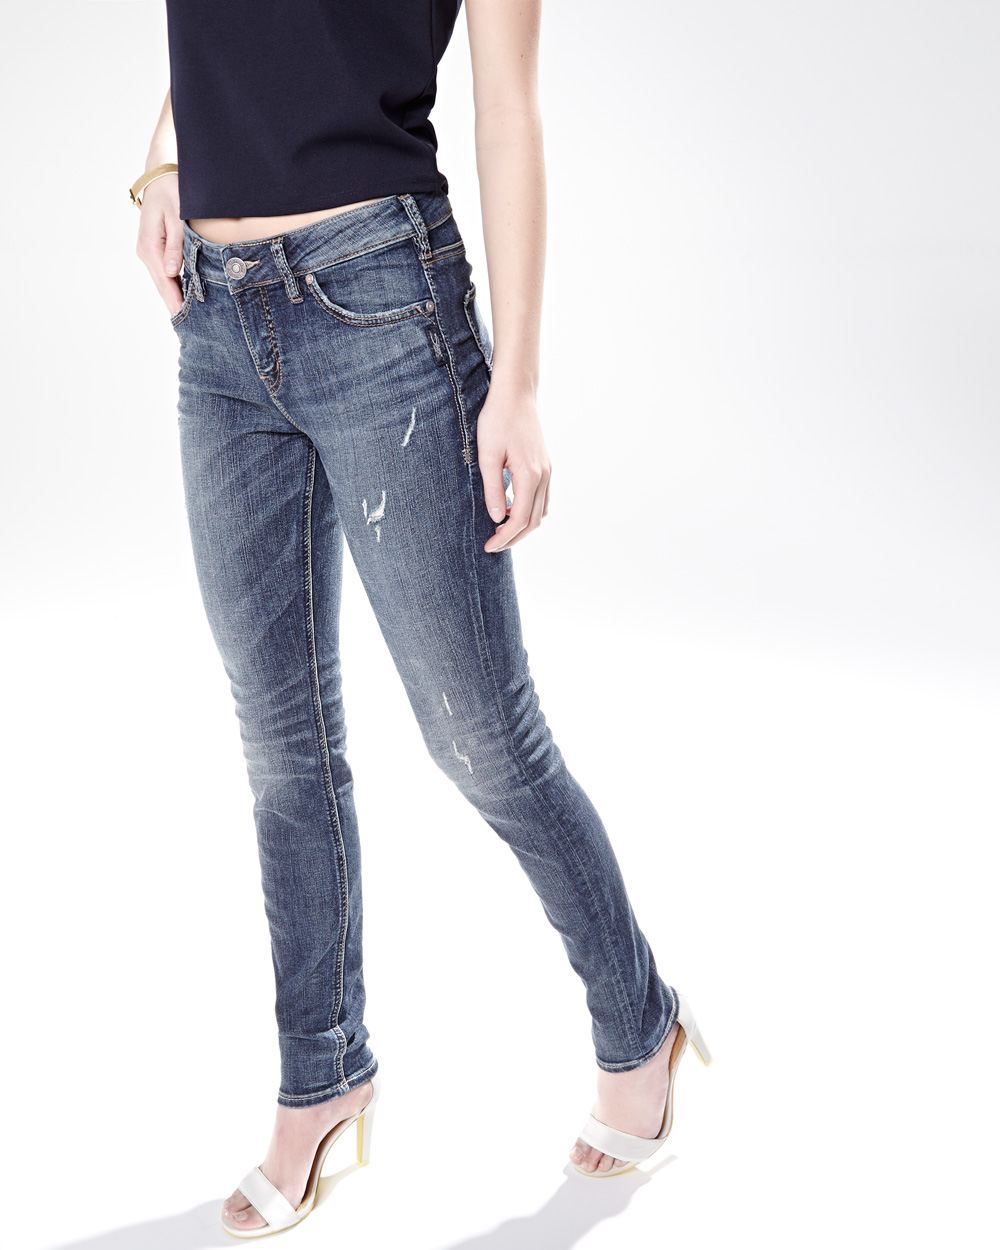 Silver jeans (TM) - Aiko high waist skinny jeans in medium blue ...